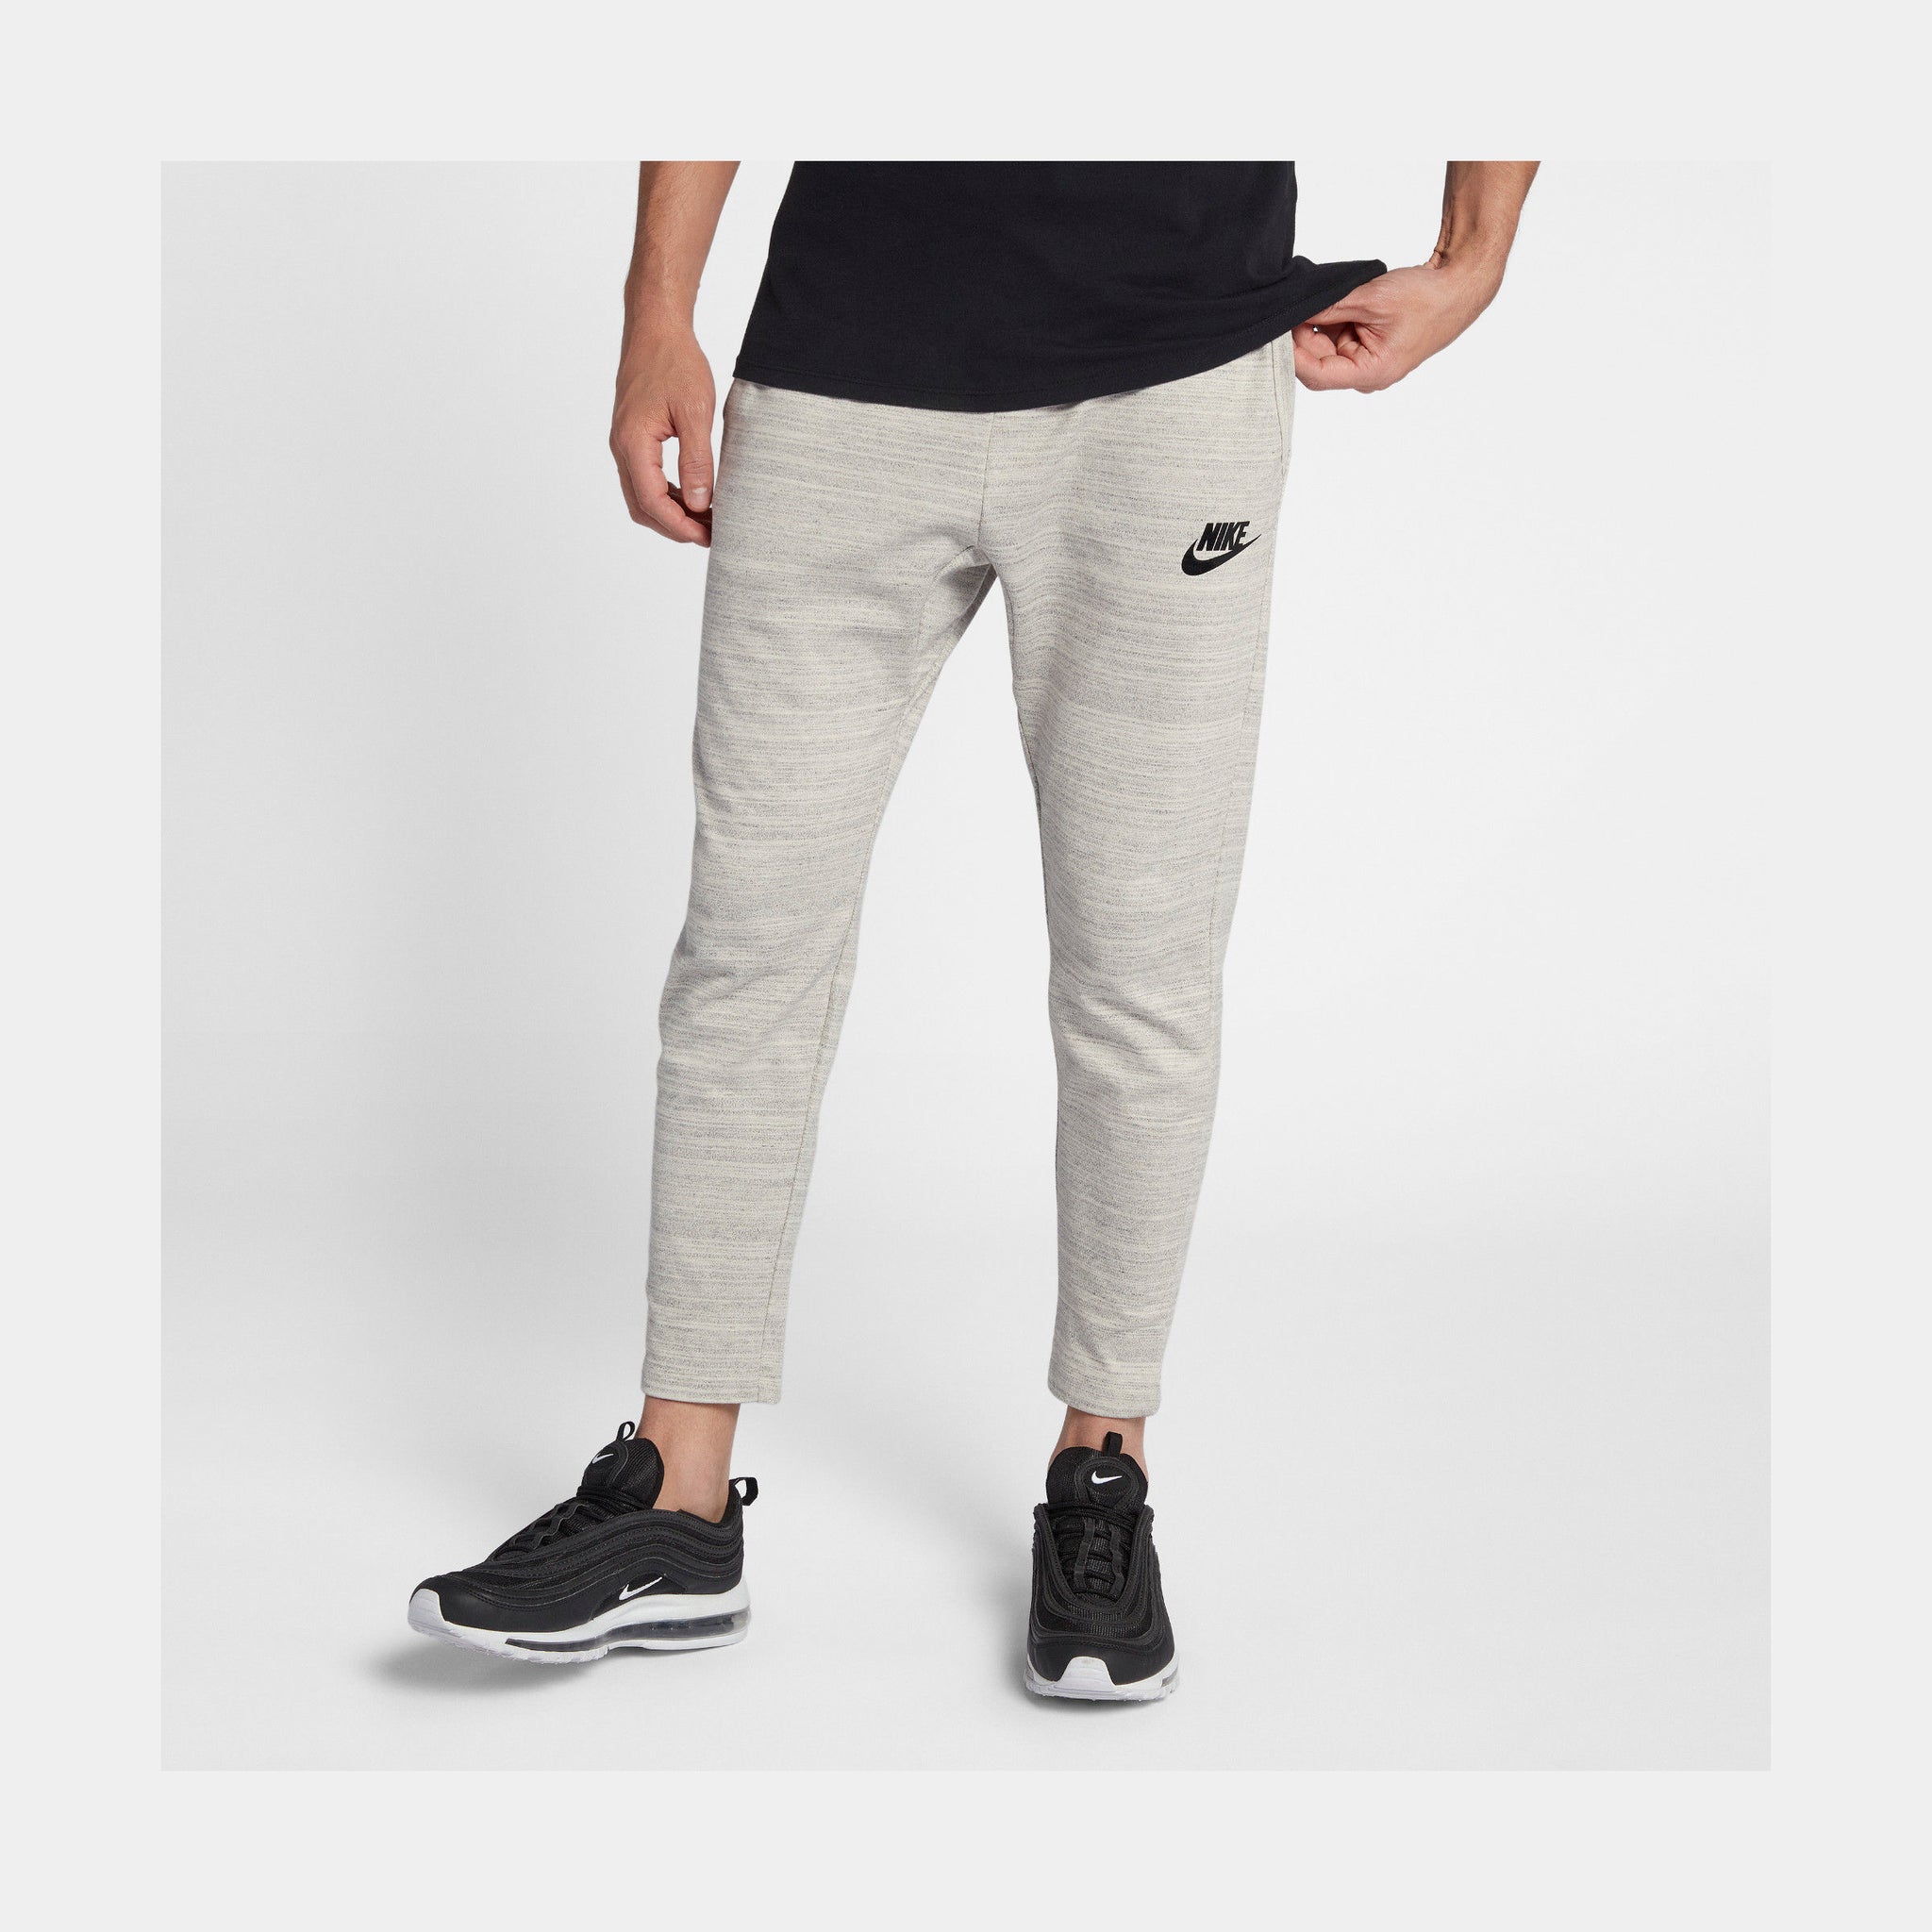 Men's Joey Logano Concepts Sport Charcoal Quest Knit Pants